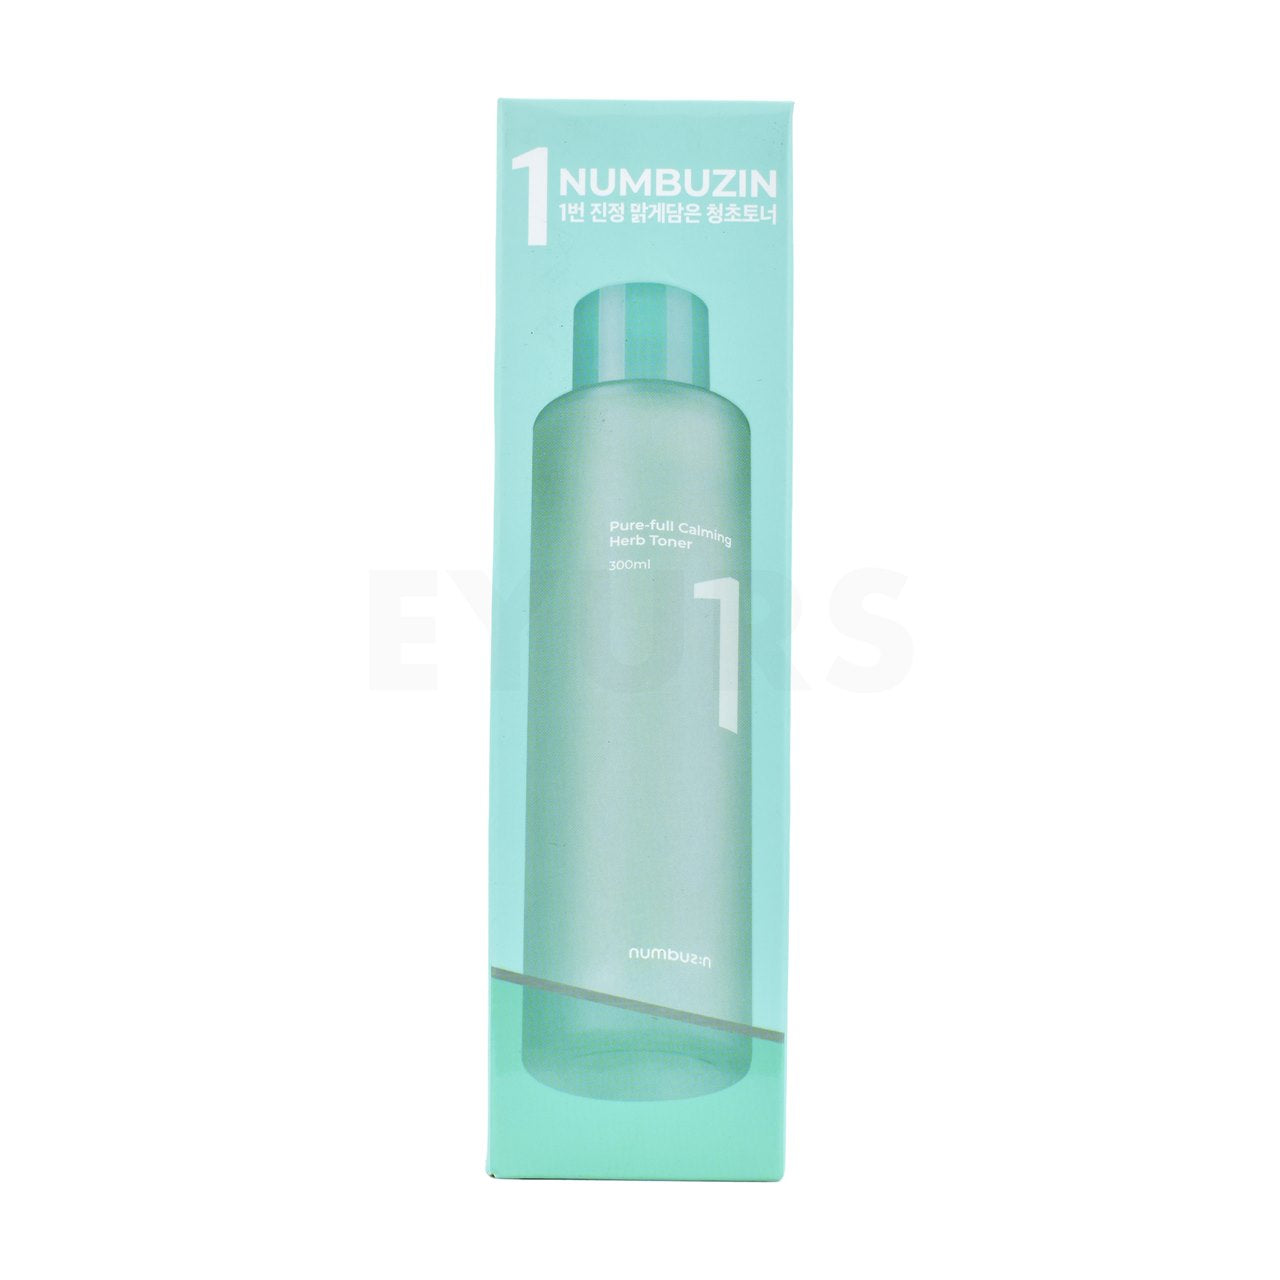 korean toner for acne prone skin numbuzin no.1 pure full calming herb toner front side packaging box